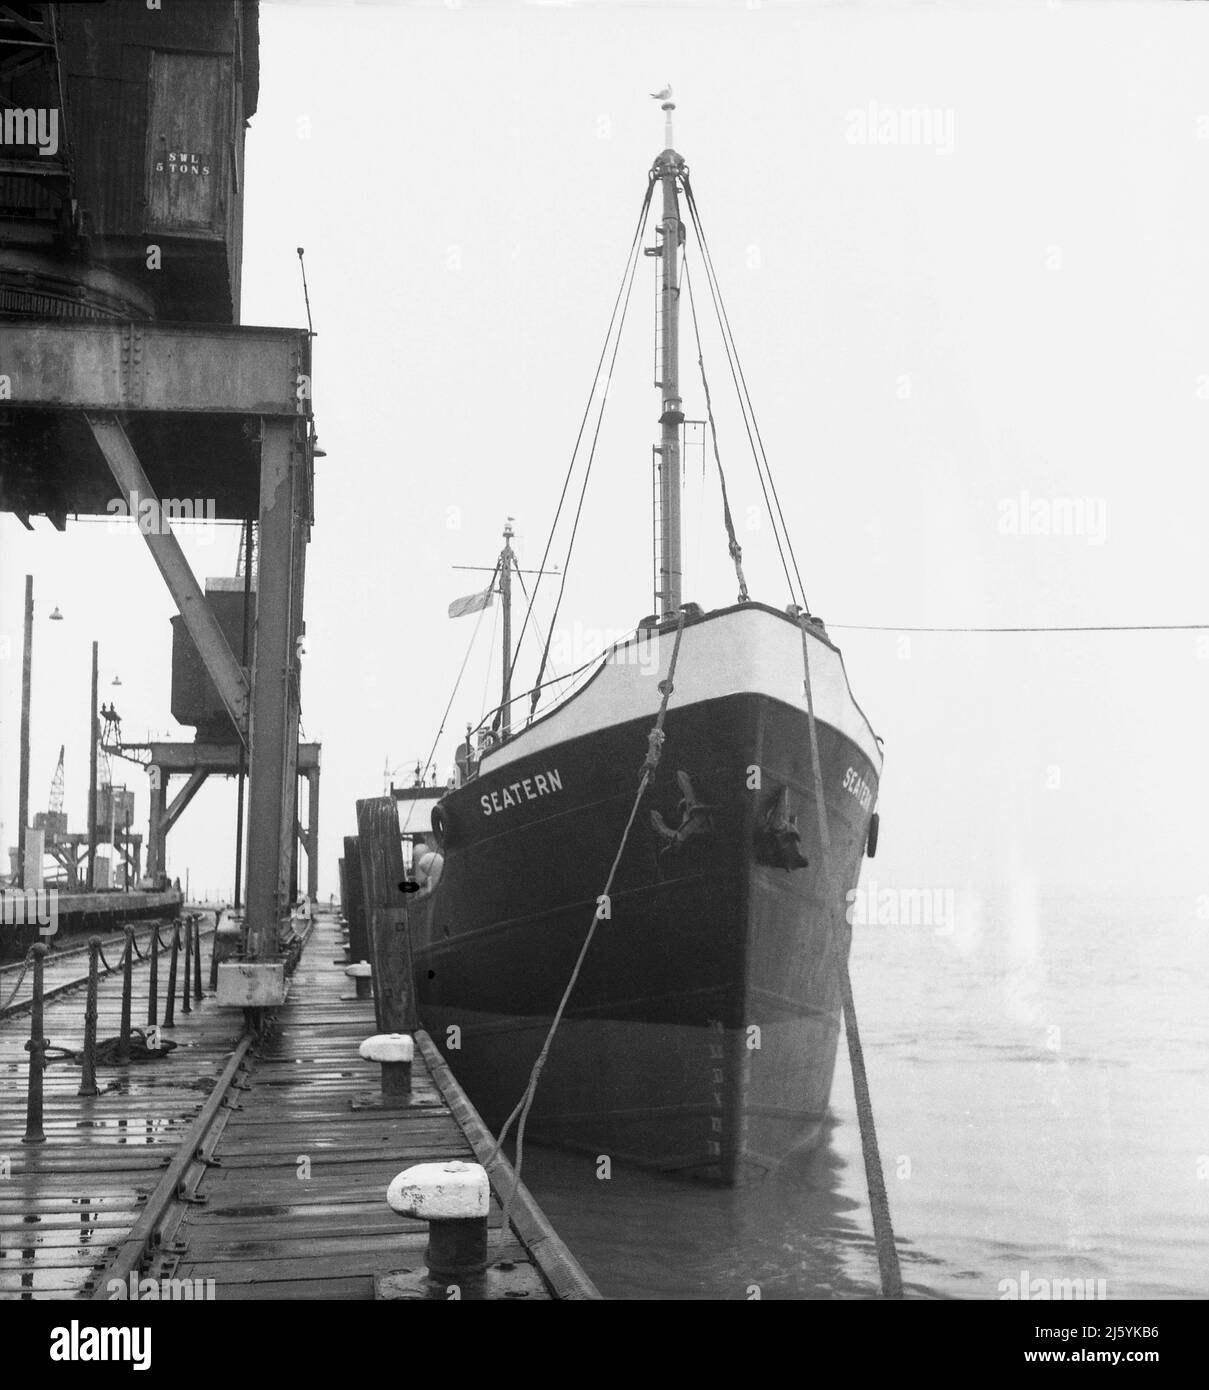 1960s, historical, cargo ship, 'Seatern' moored at Birkenhead docks, Merseyside, Liverpool, England, UK. Stock Photo